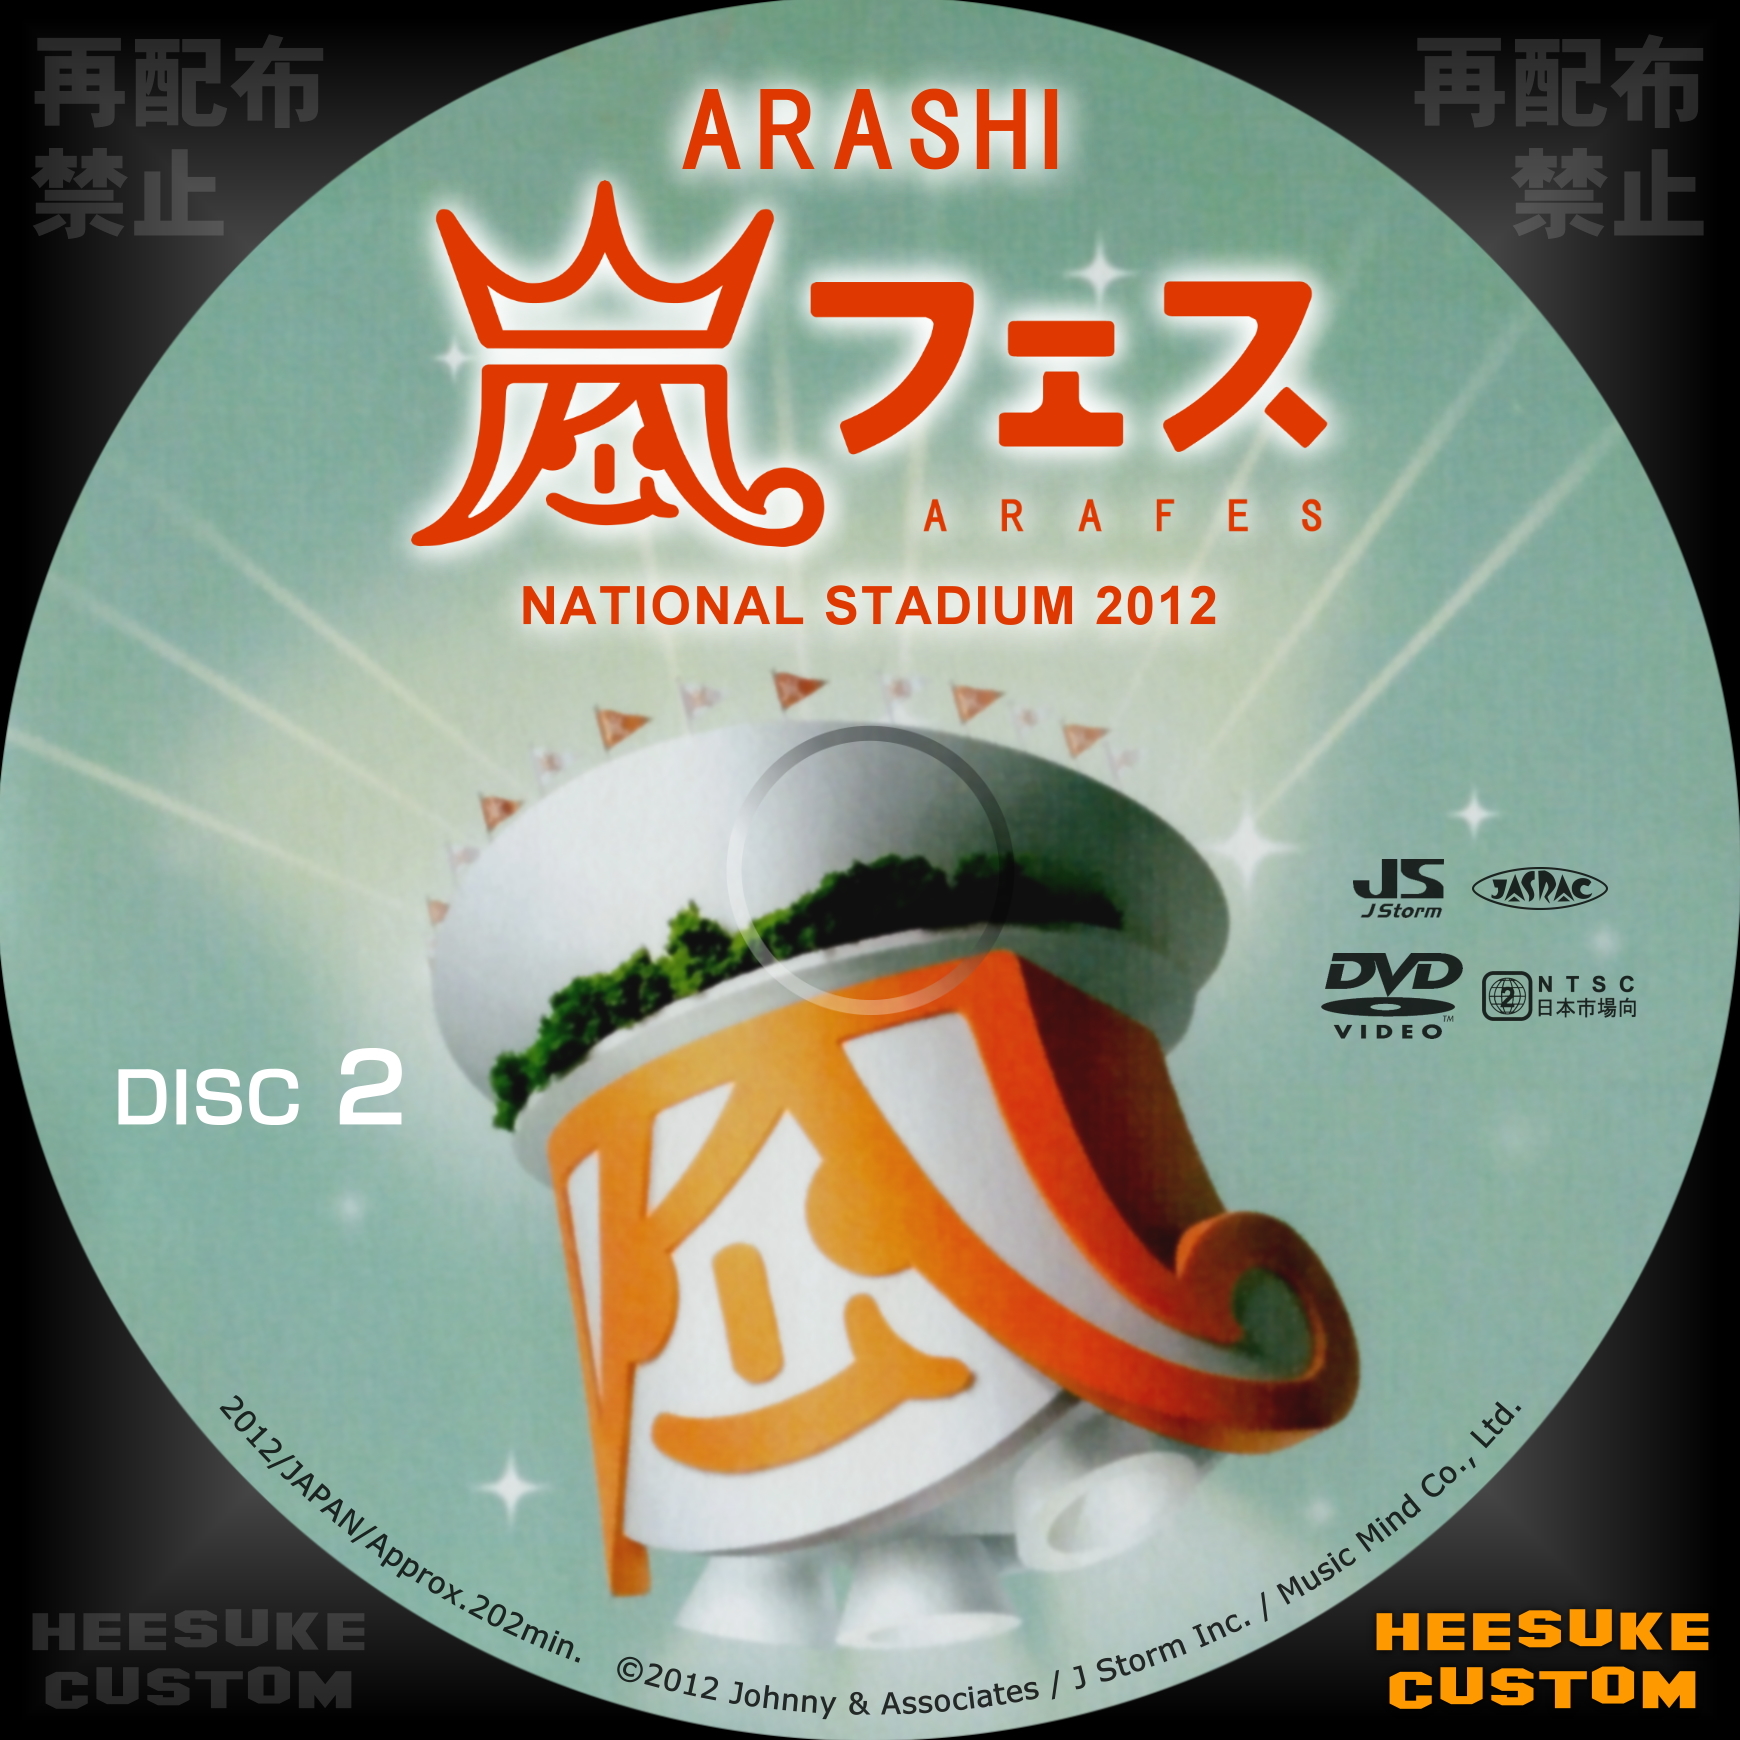 ARASHI 嵐フェス NATIONAL STADIUM 2012 DVD | hartwellspremium.com